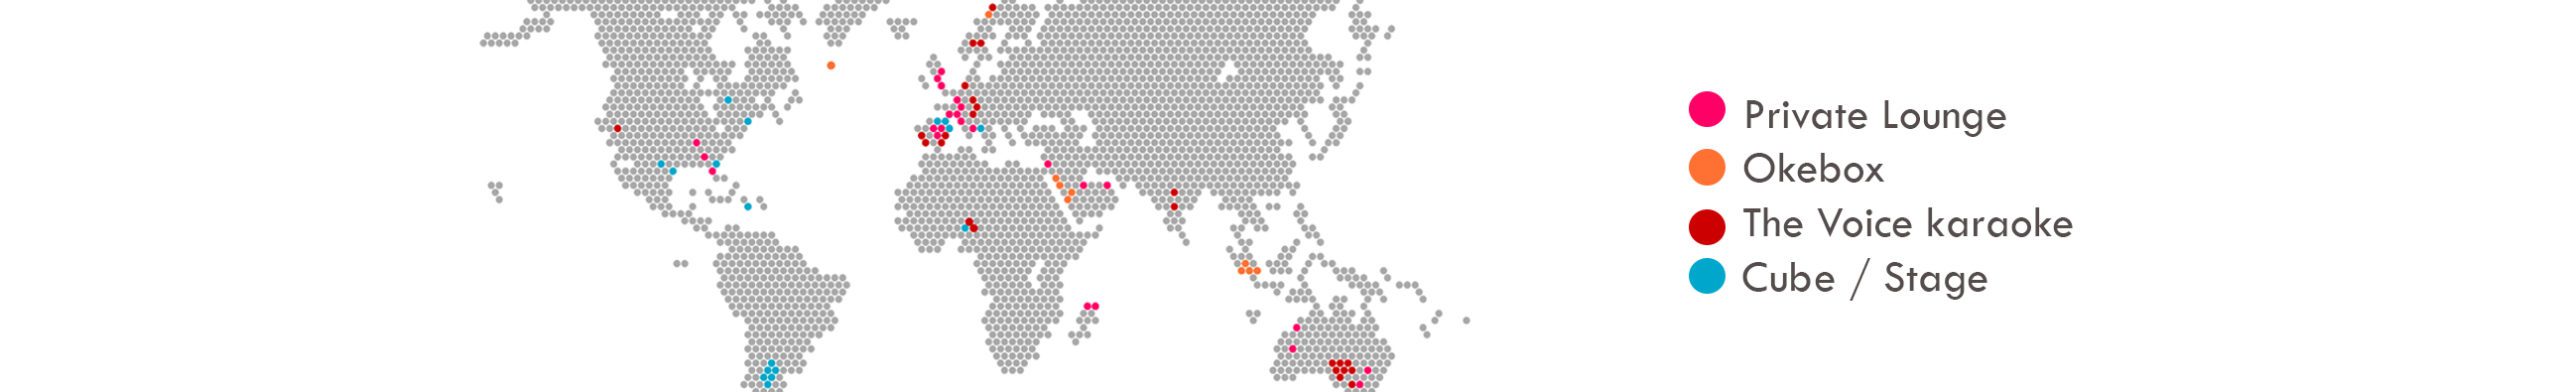 mapa mundo maquinas de karaoke